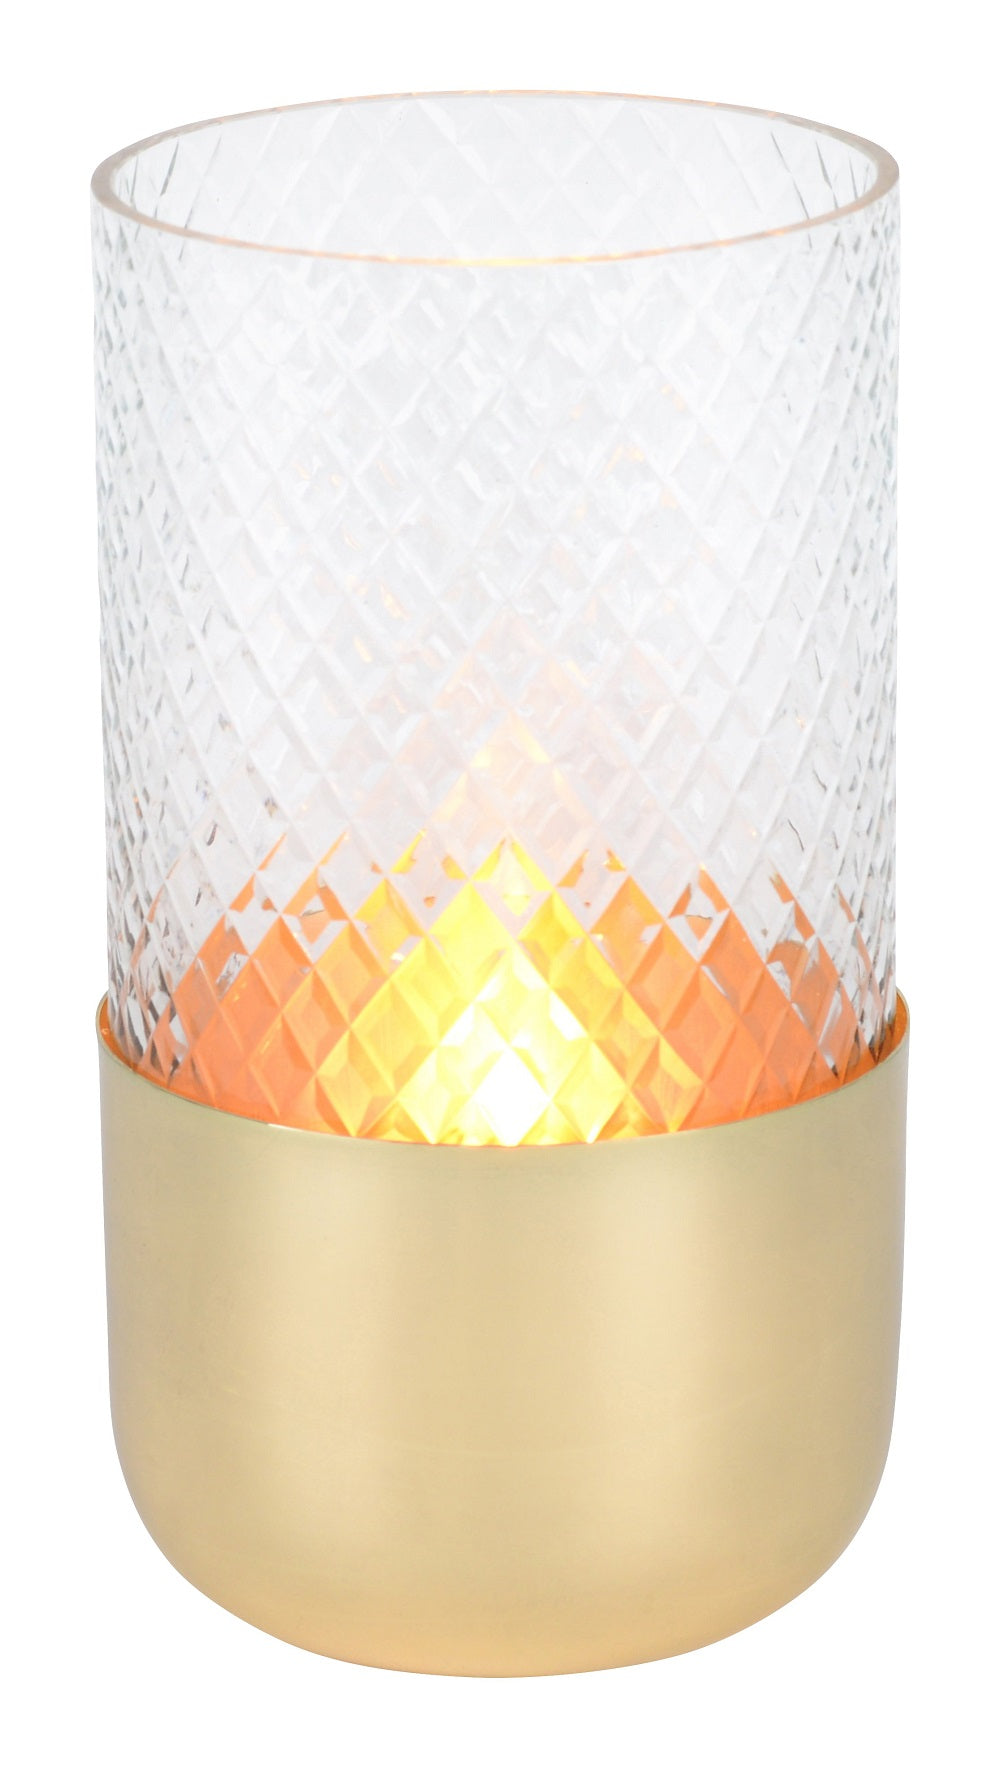 Windlicht Deko Vase Glas/Metall klar/gold Marylebone 19cm